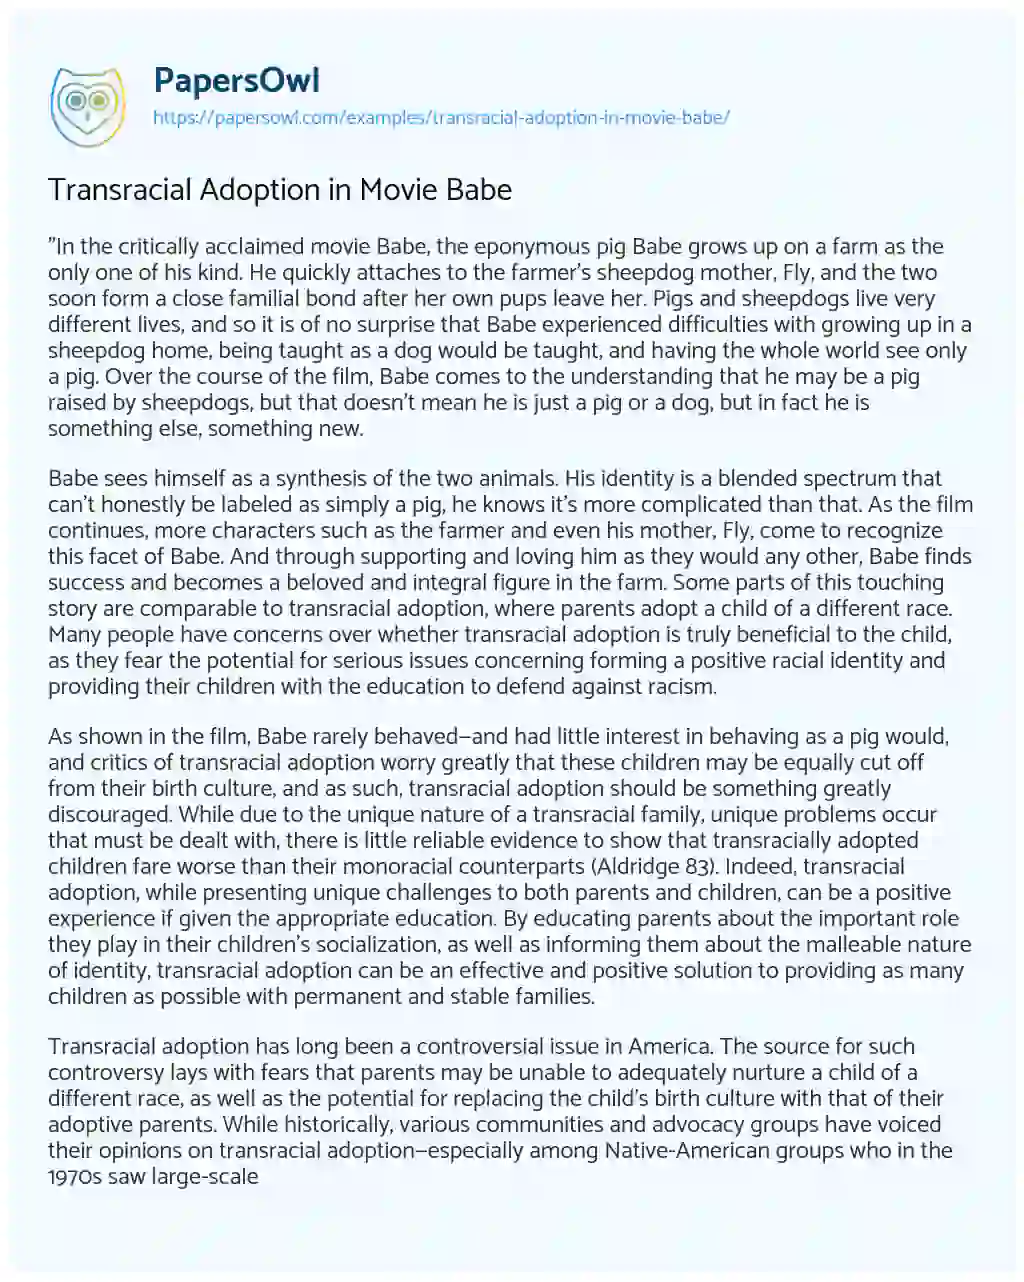 Essay on Transracial Adoption in Movie Babe